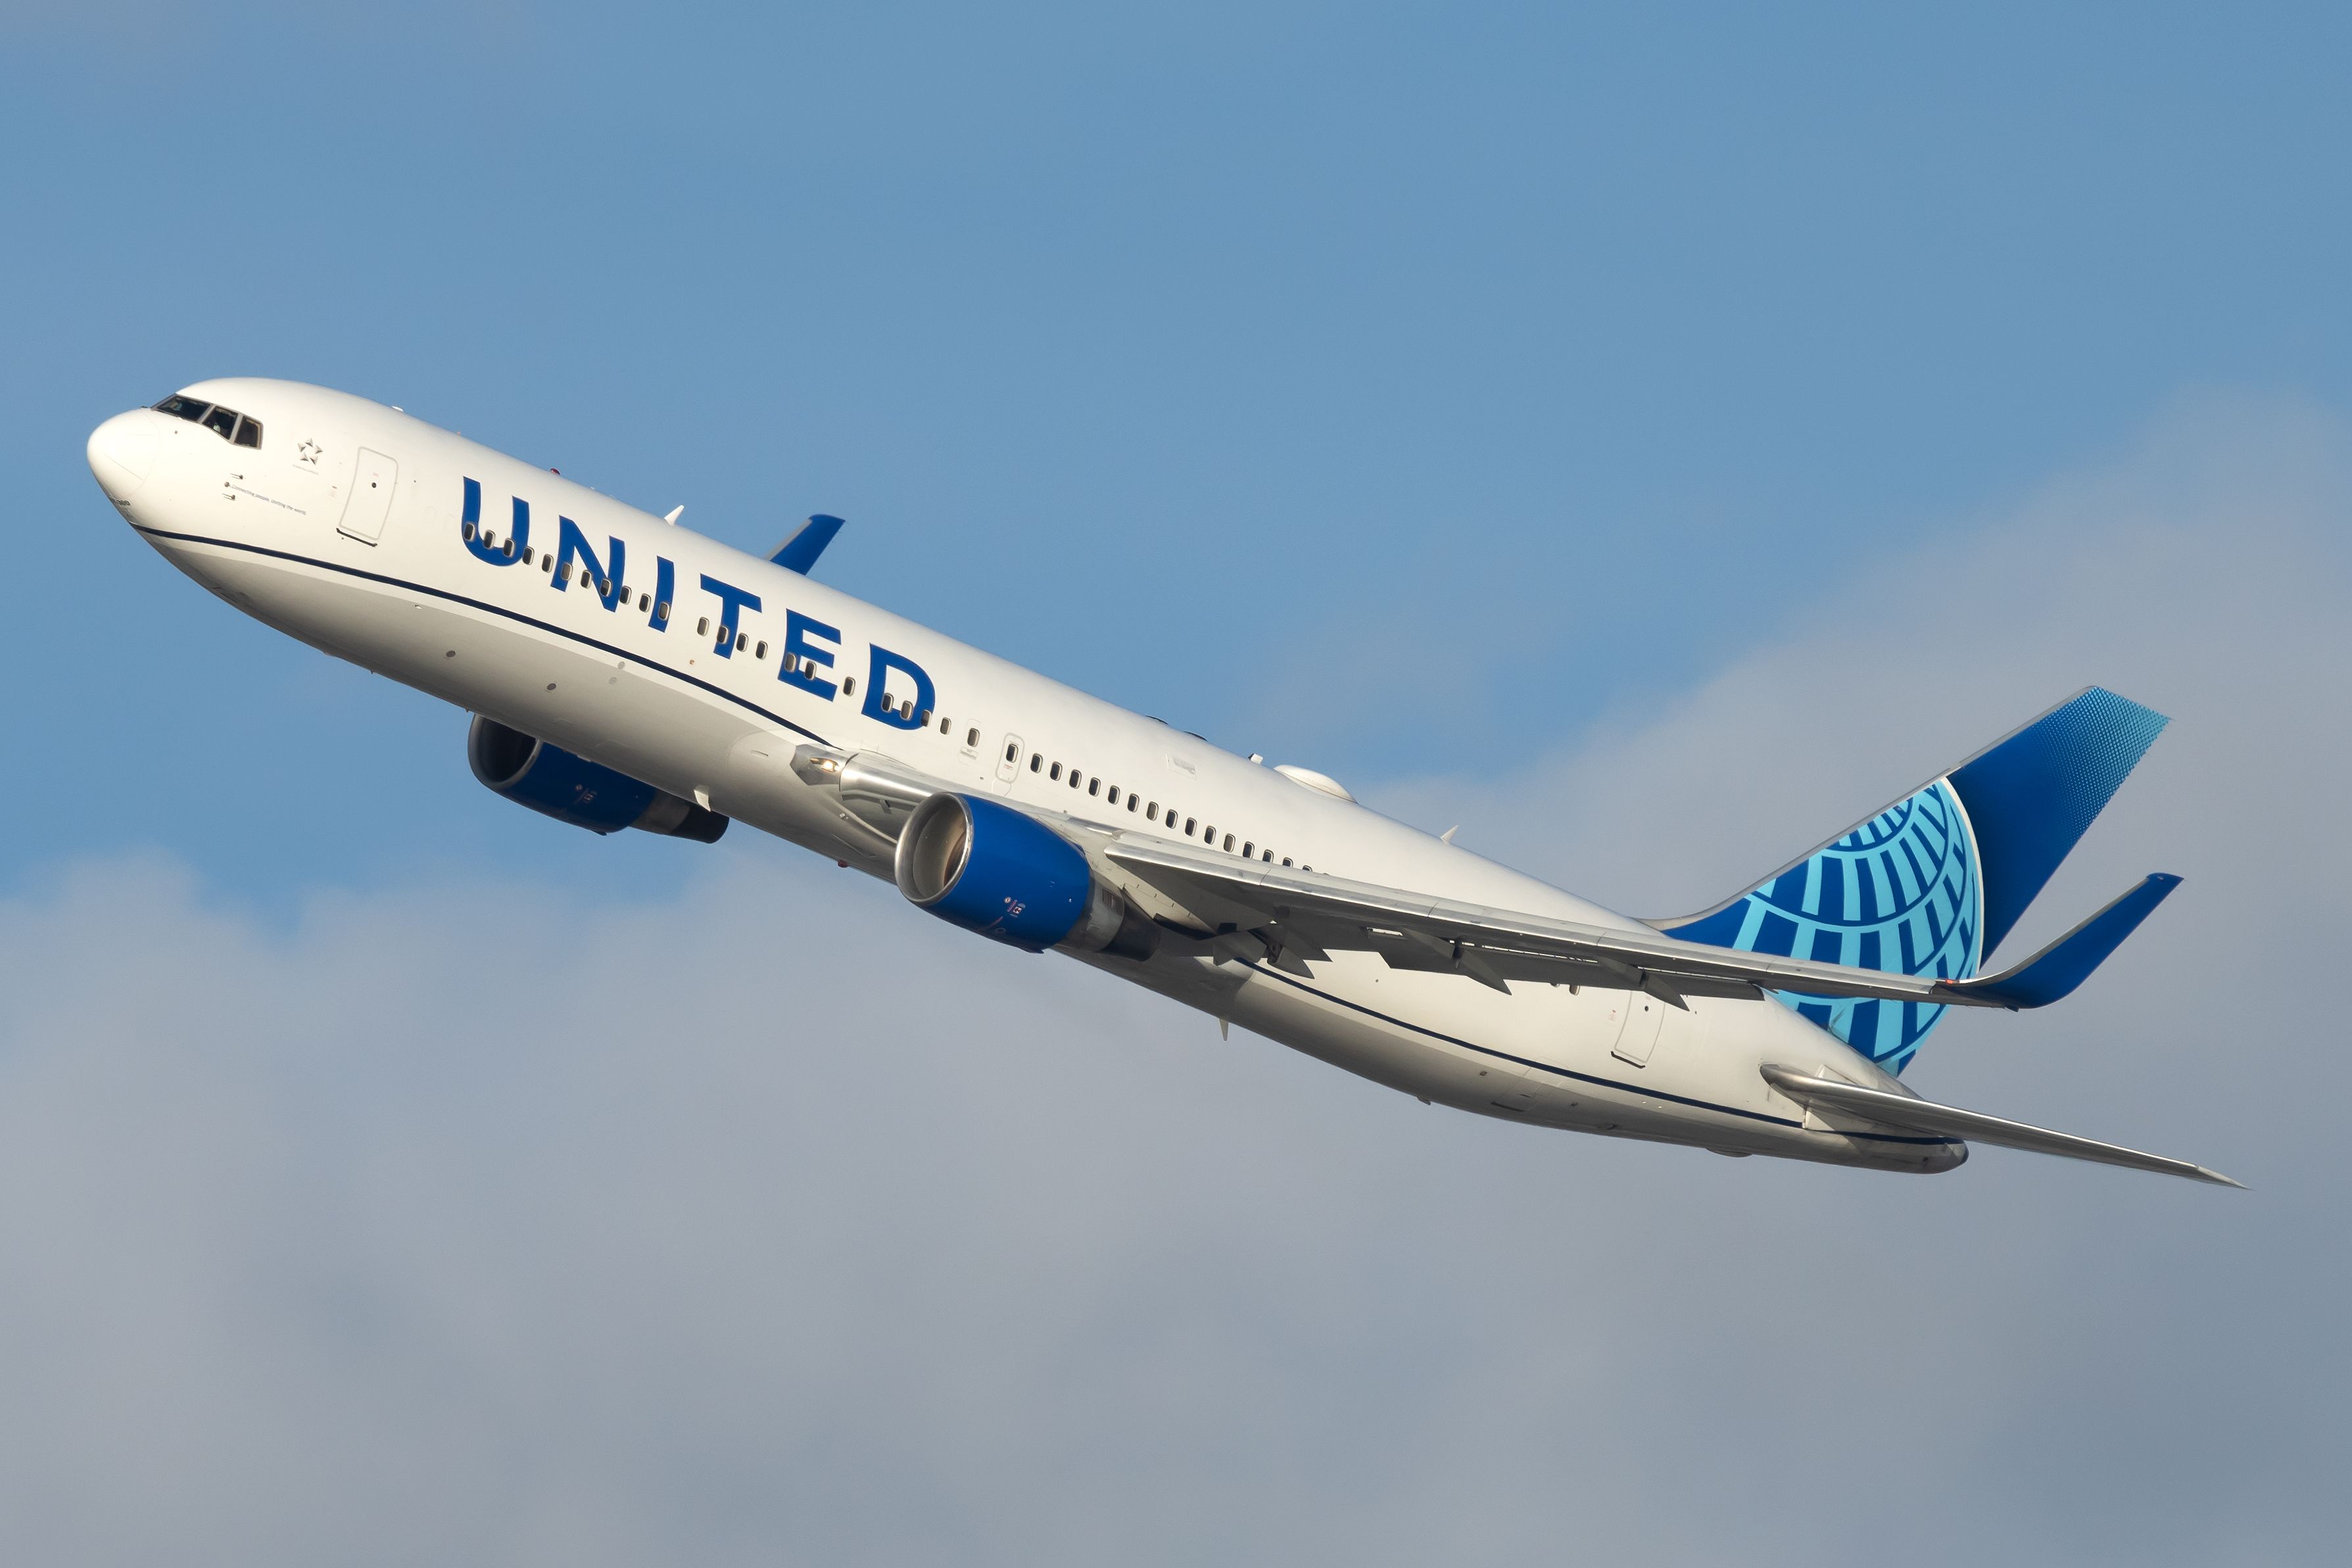 United Boeing 767 in flight